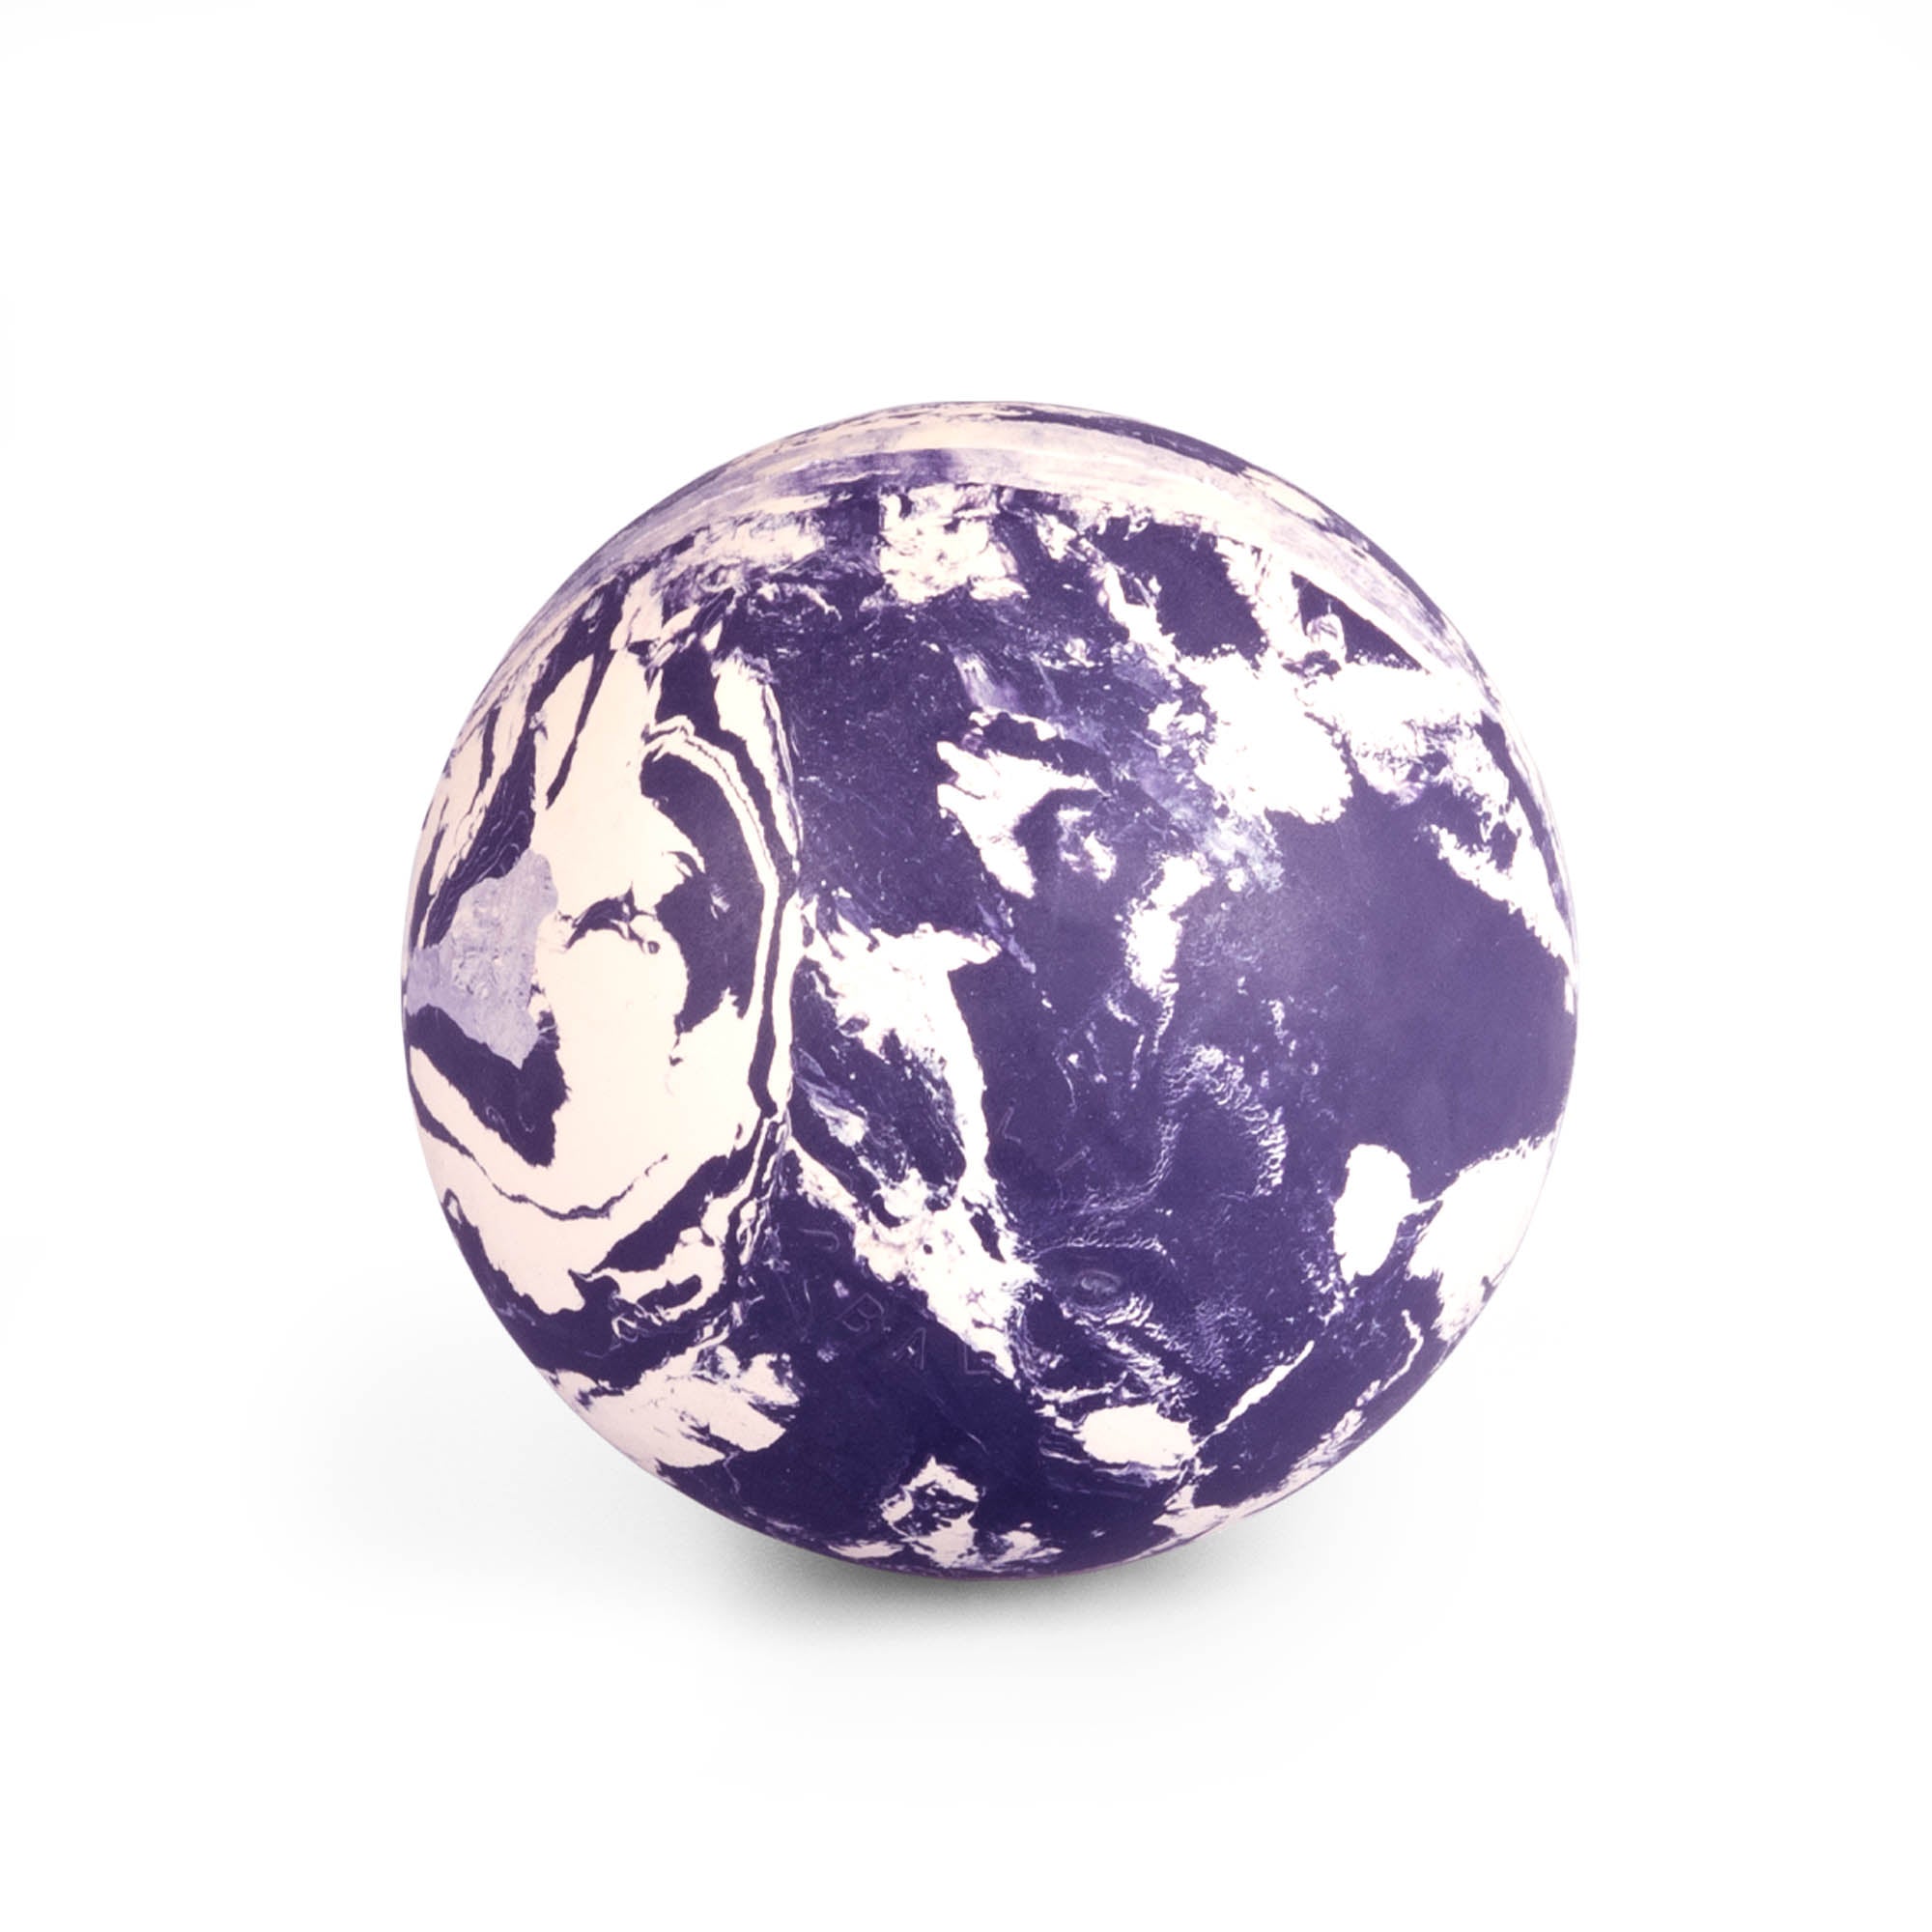 Single purple oddballs bounce ball